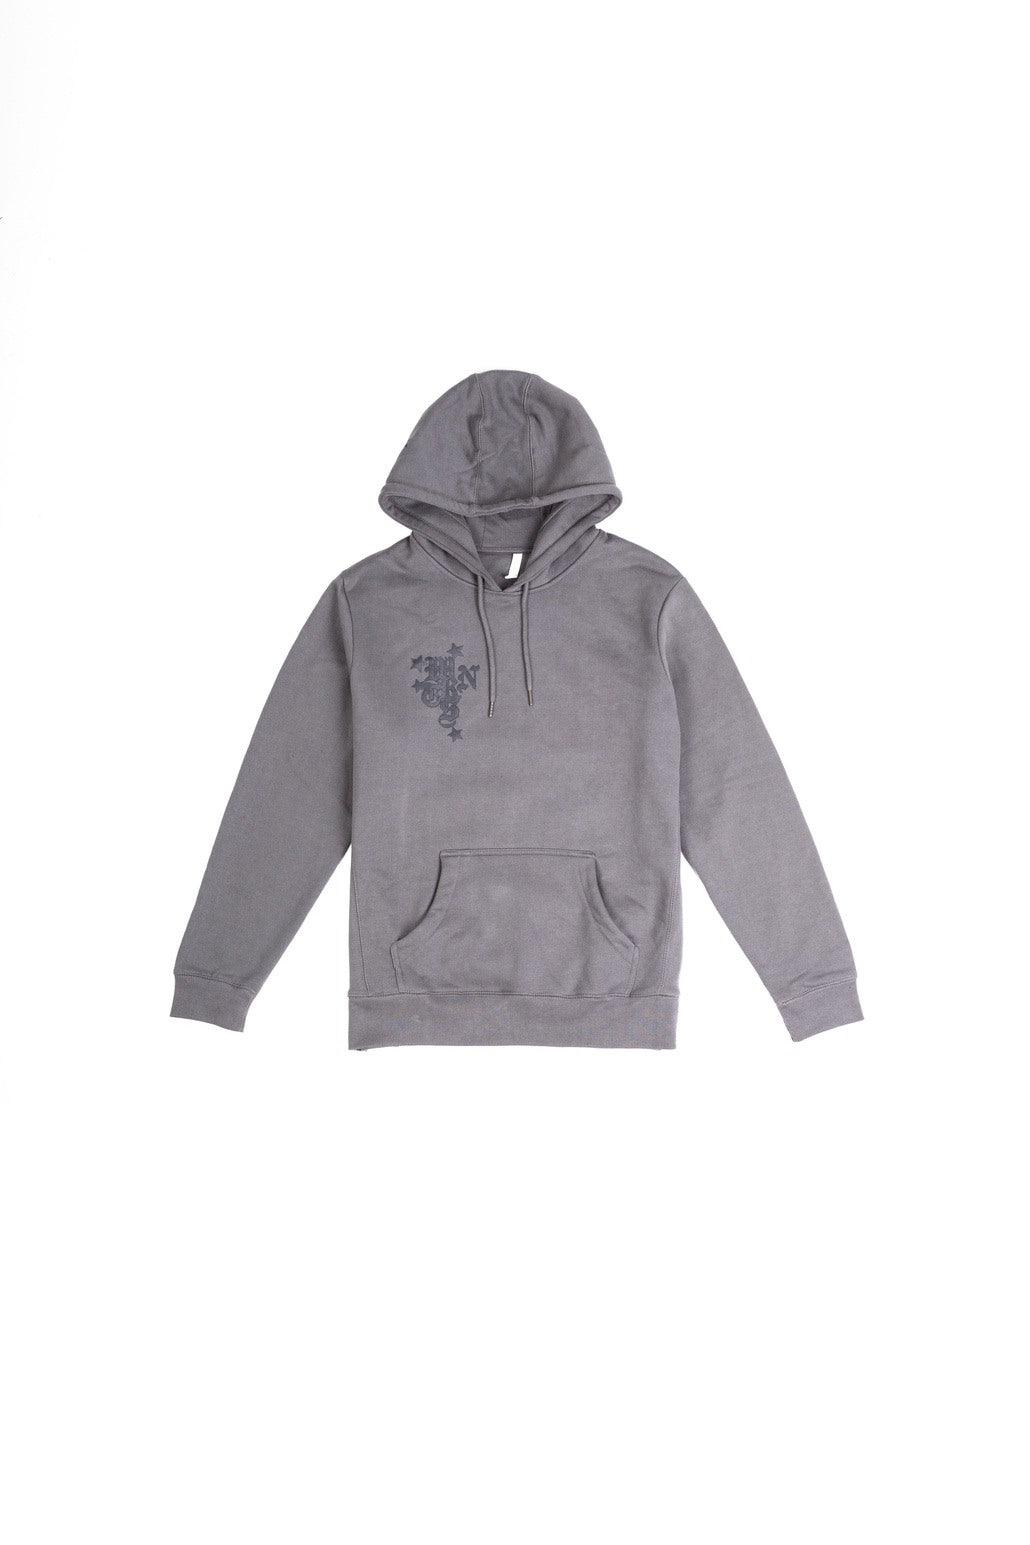 wrnts hoodie in grey - Different Streetwear